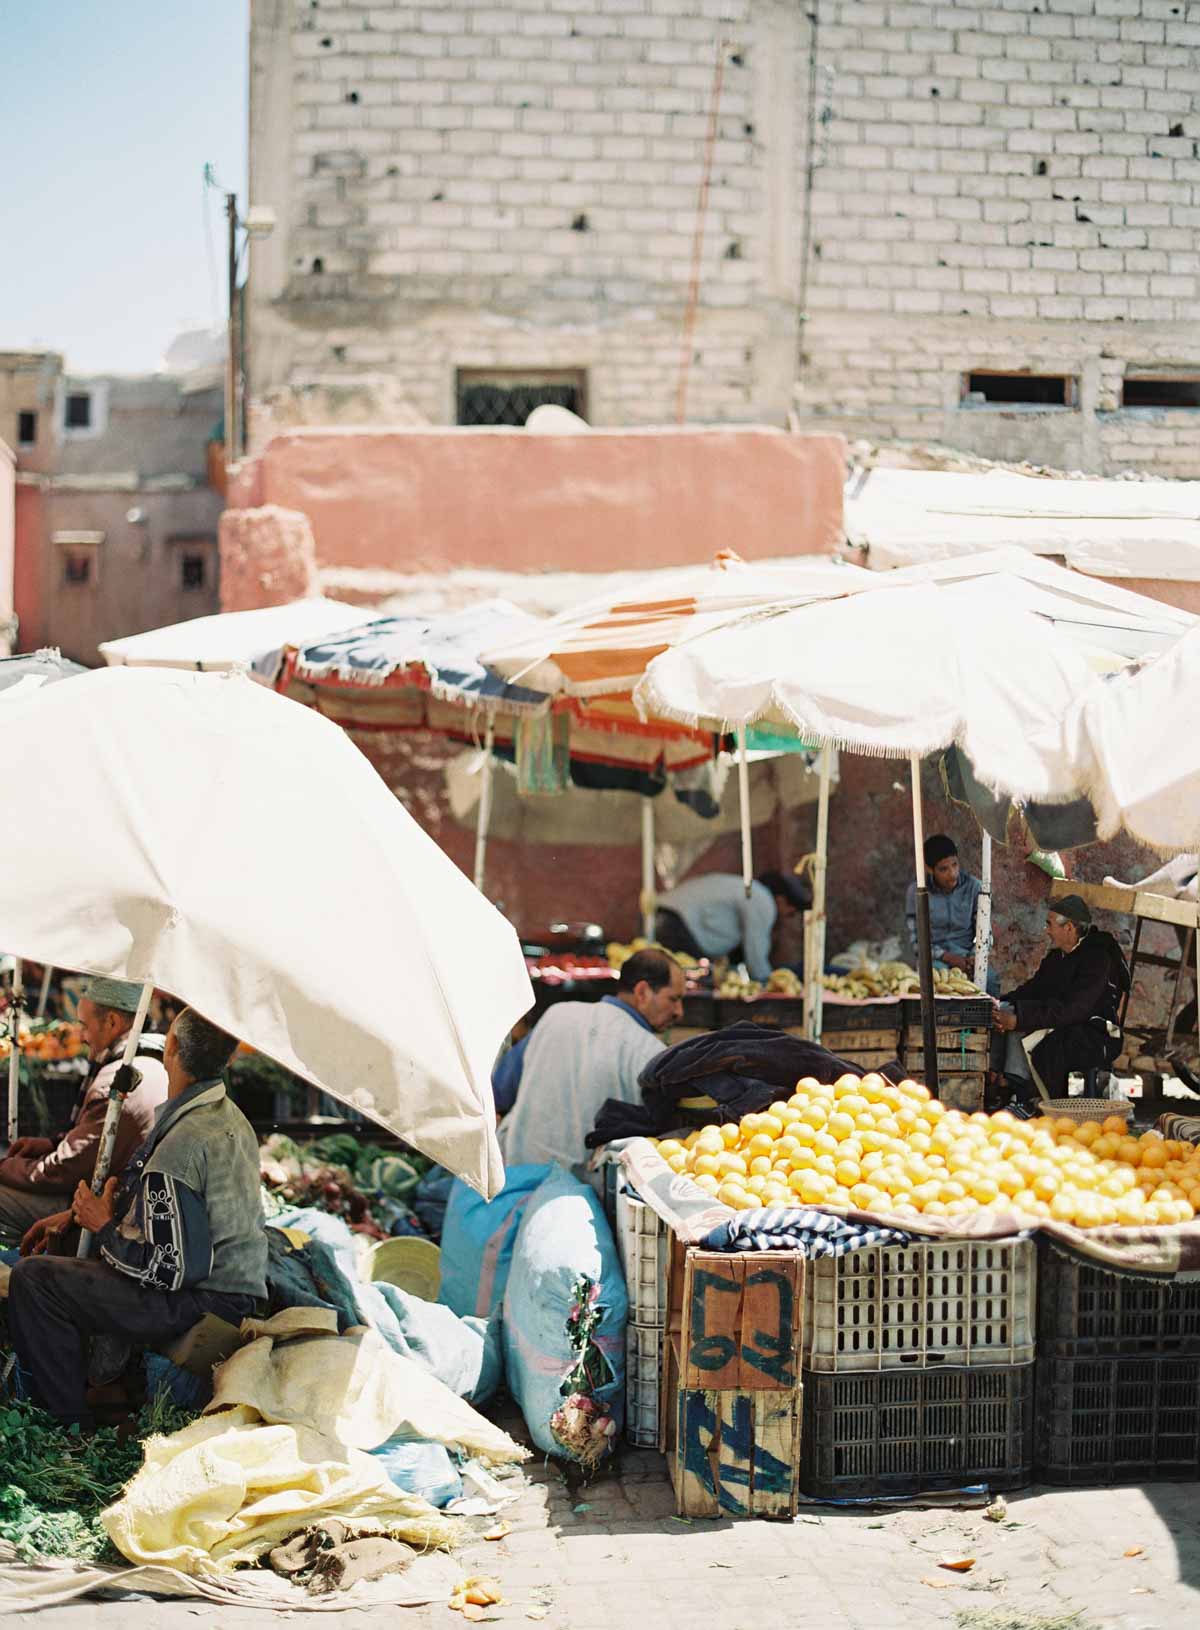 Kurt_Boomer_Photography-www.kurtboomer.com_Morocco (19)